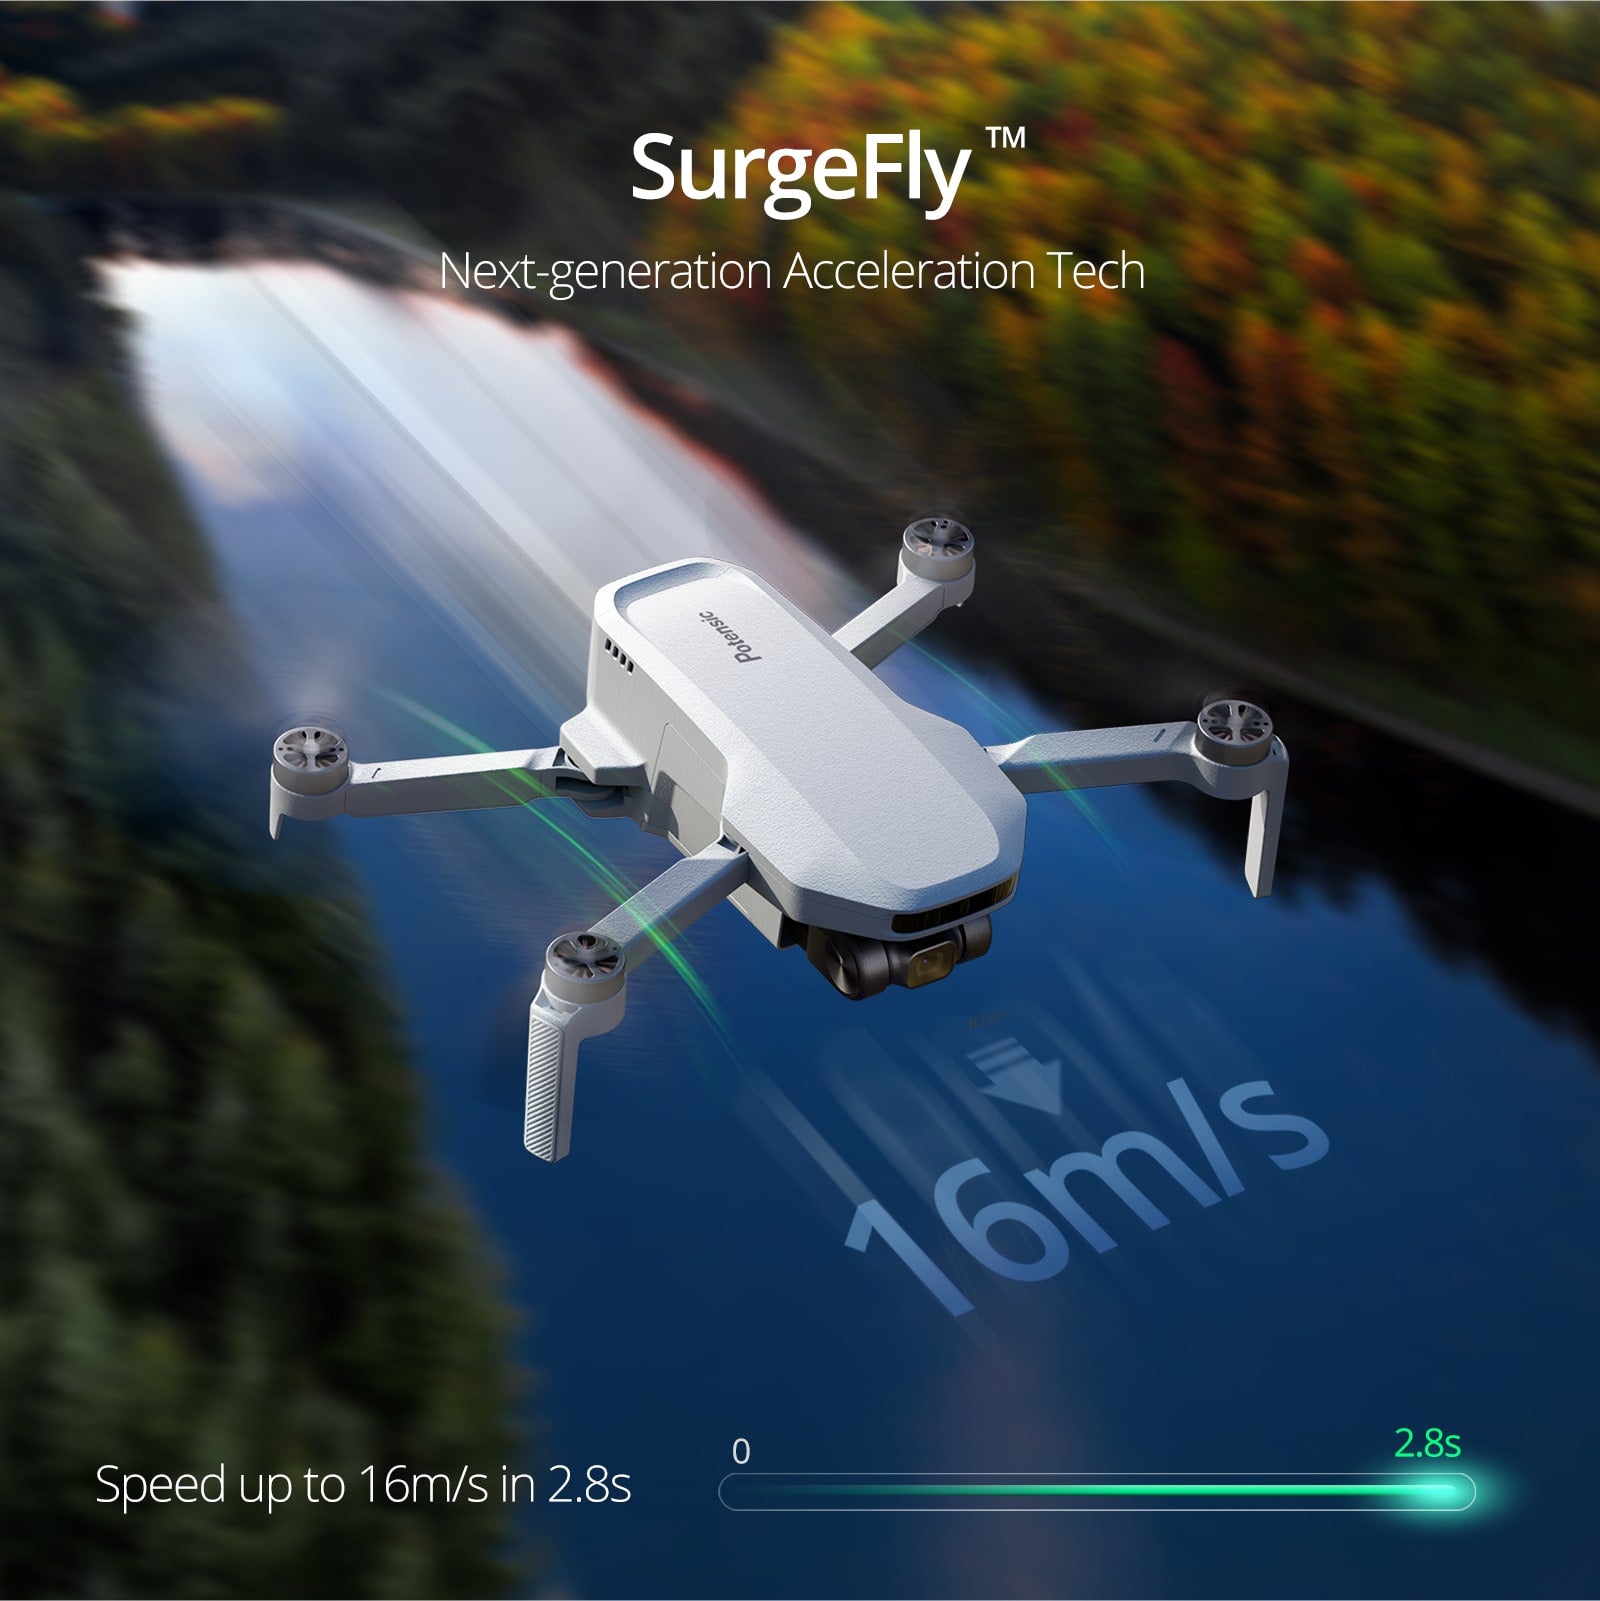 ATOM SE Sub 250g faltbare GPS-Drohne mit 4K HD EIS-Kamera 